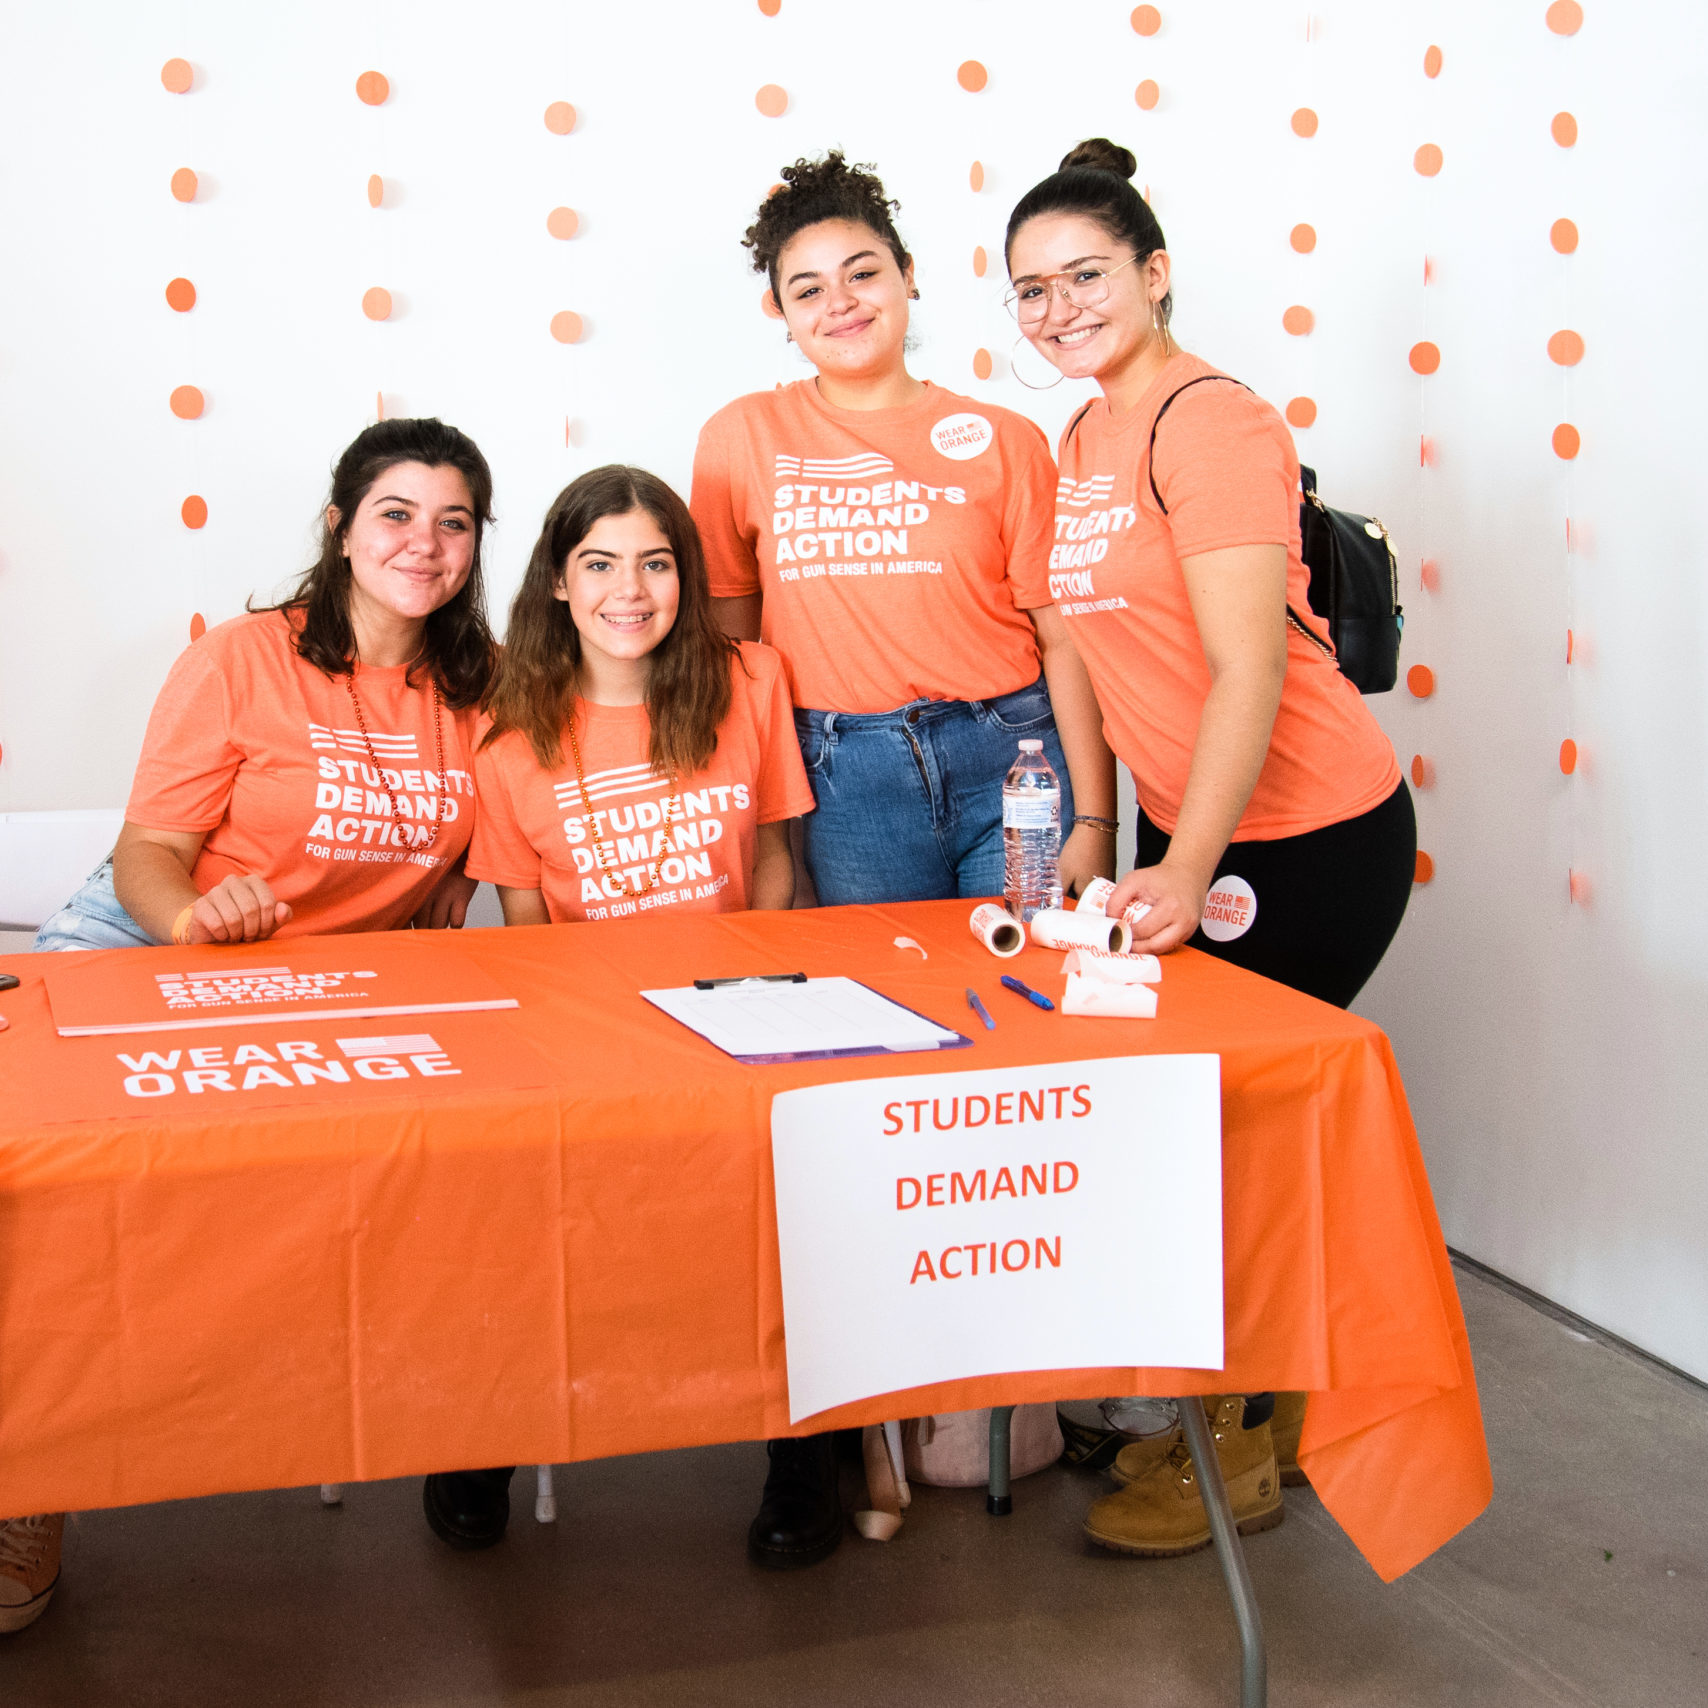 Students Demand Action volunteers tabling in orange t-shirts